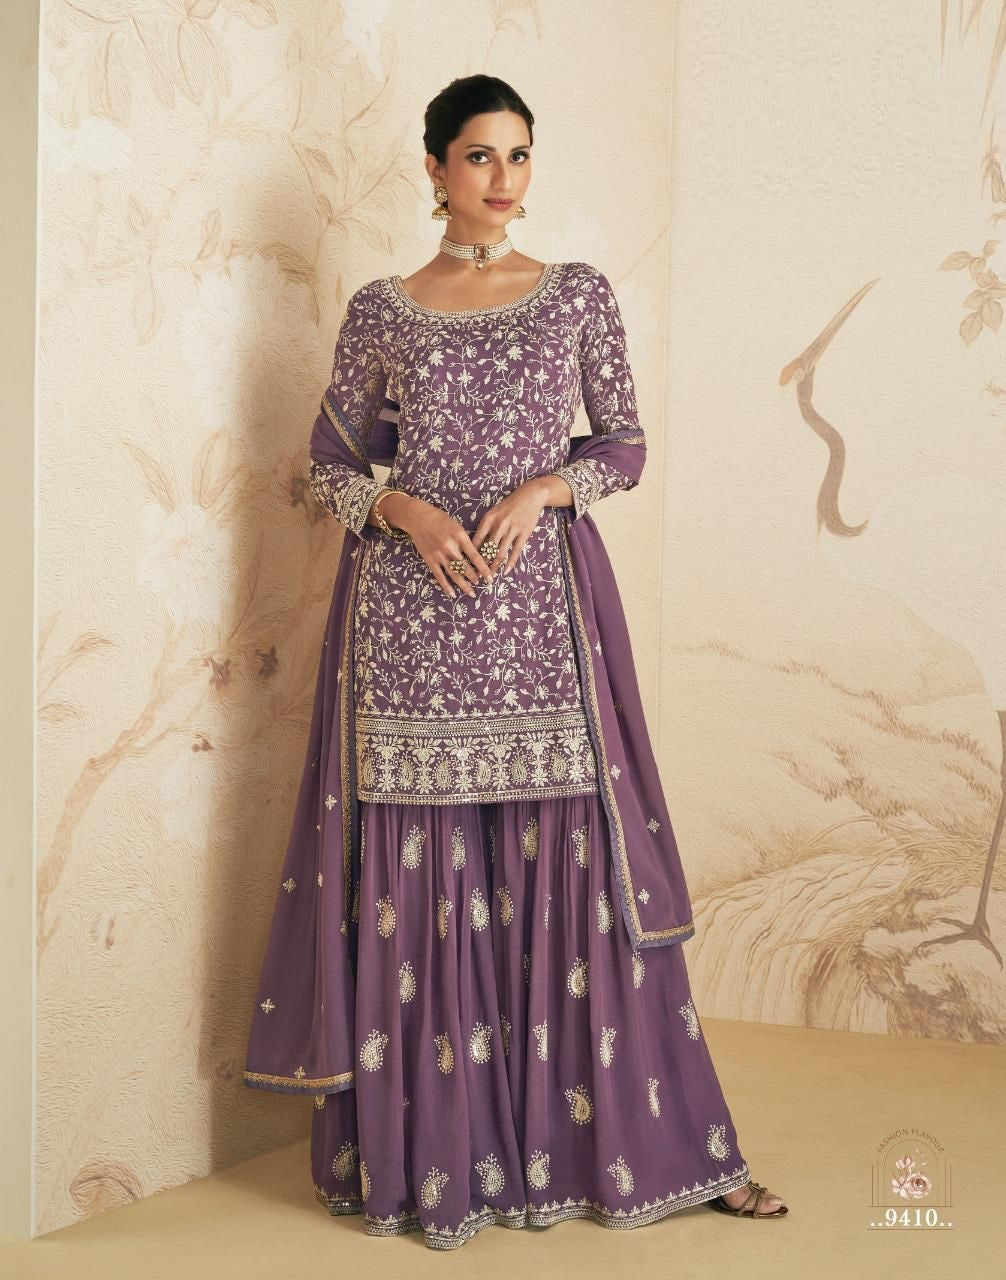 Women's Cotton Kurti with Sharara - Shop online women fashion, indo-western,  ethnic wear, sari, suits, kurtis, watches, gifts.